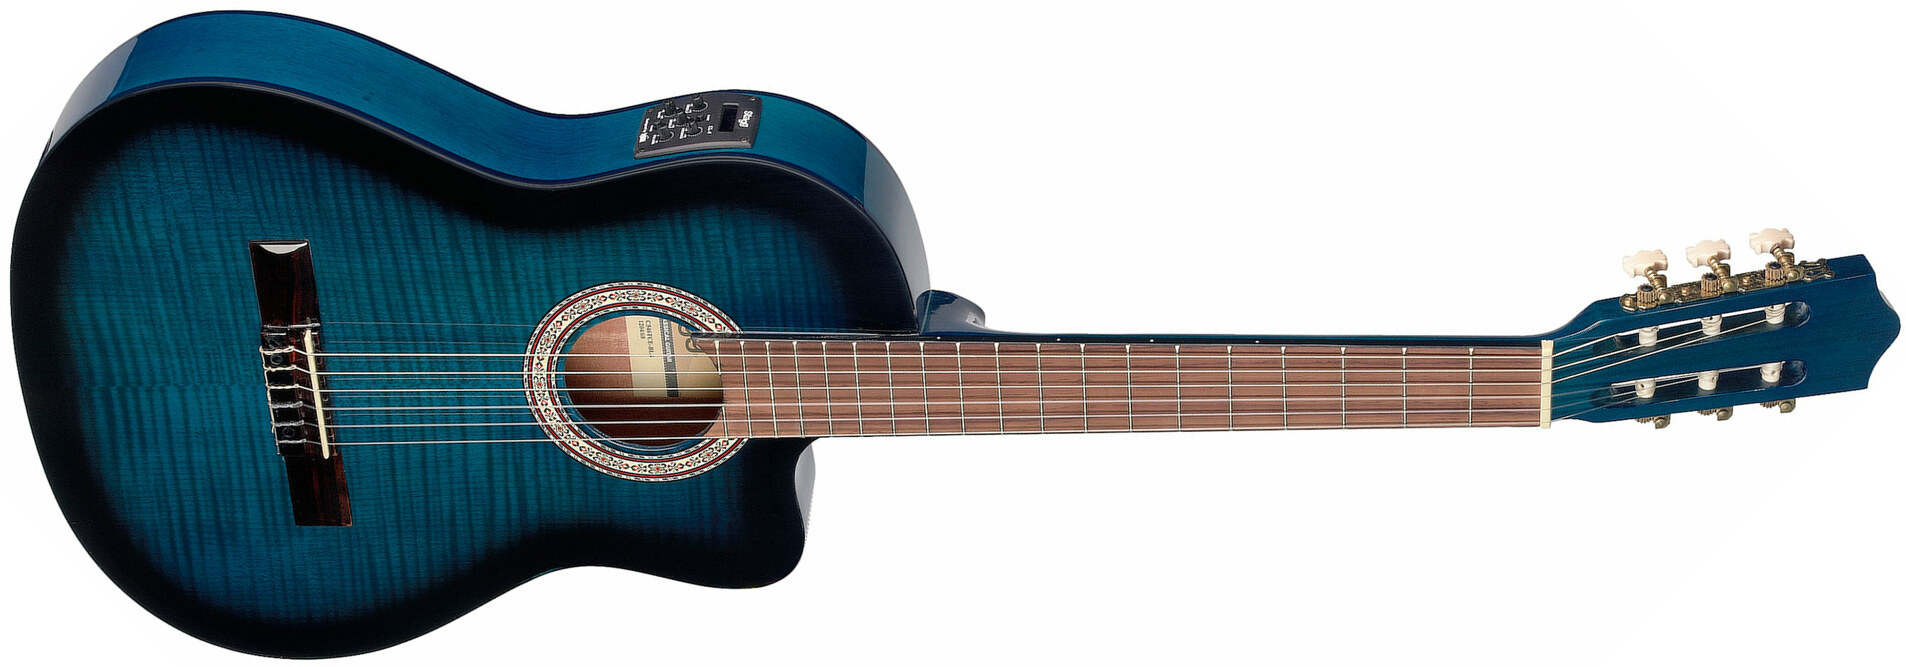 Stagg C546tce Bls Cw Epicea Catalpa - Blueburst - Klassieke gitaar 4/4 - Main picture